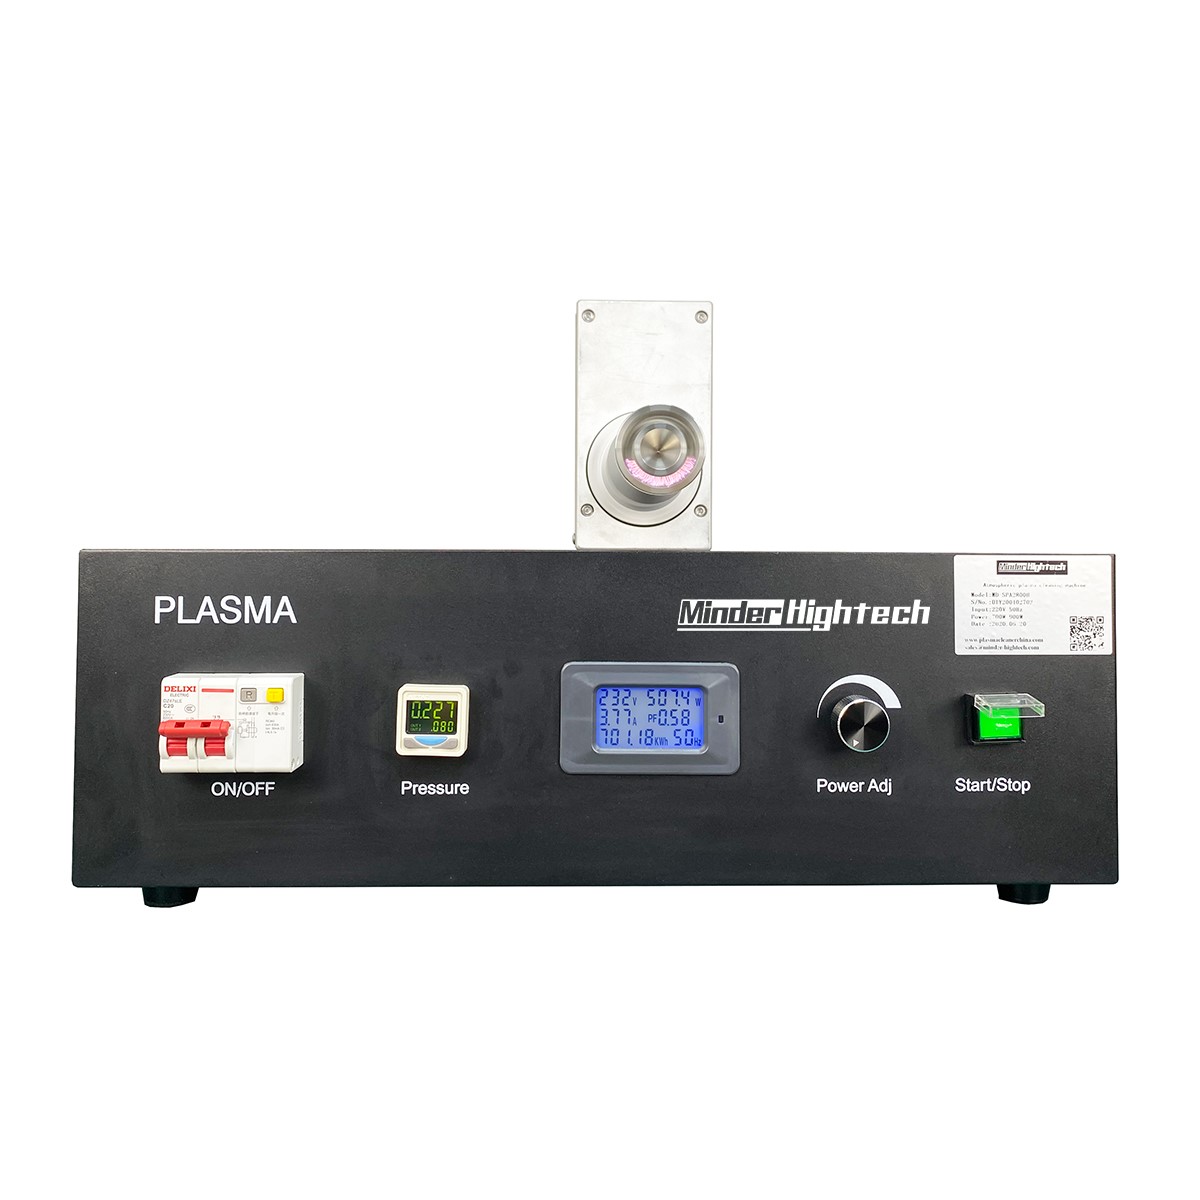 Atmospheric rotary plasma surface treatment machine